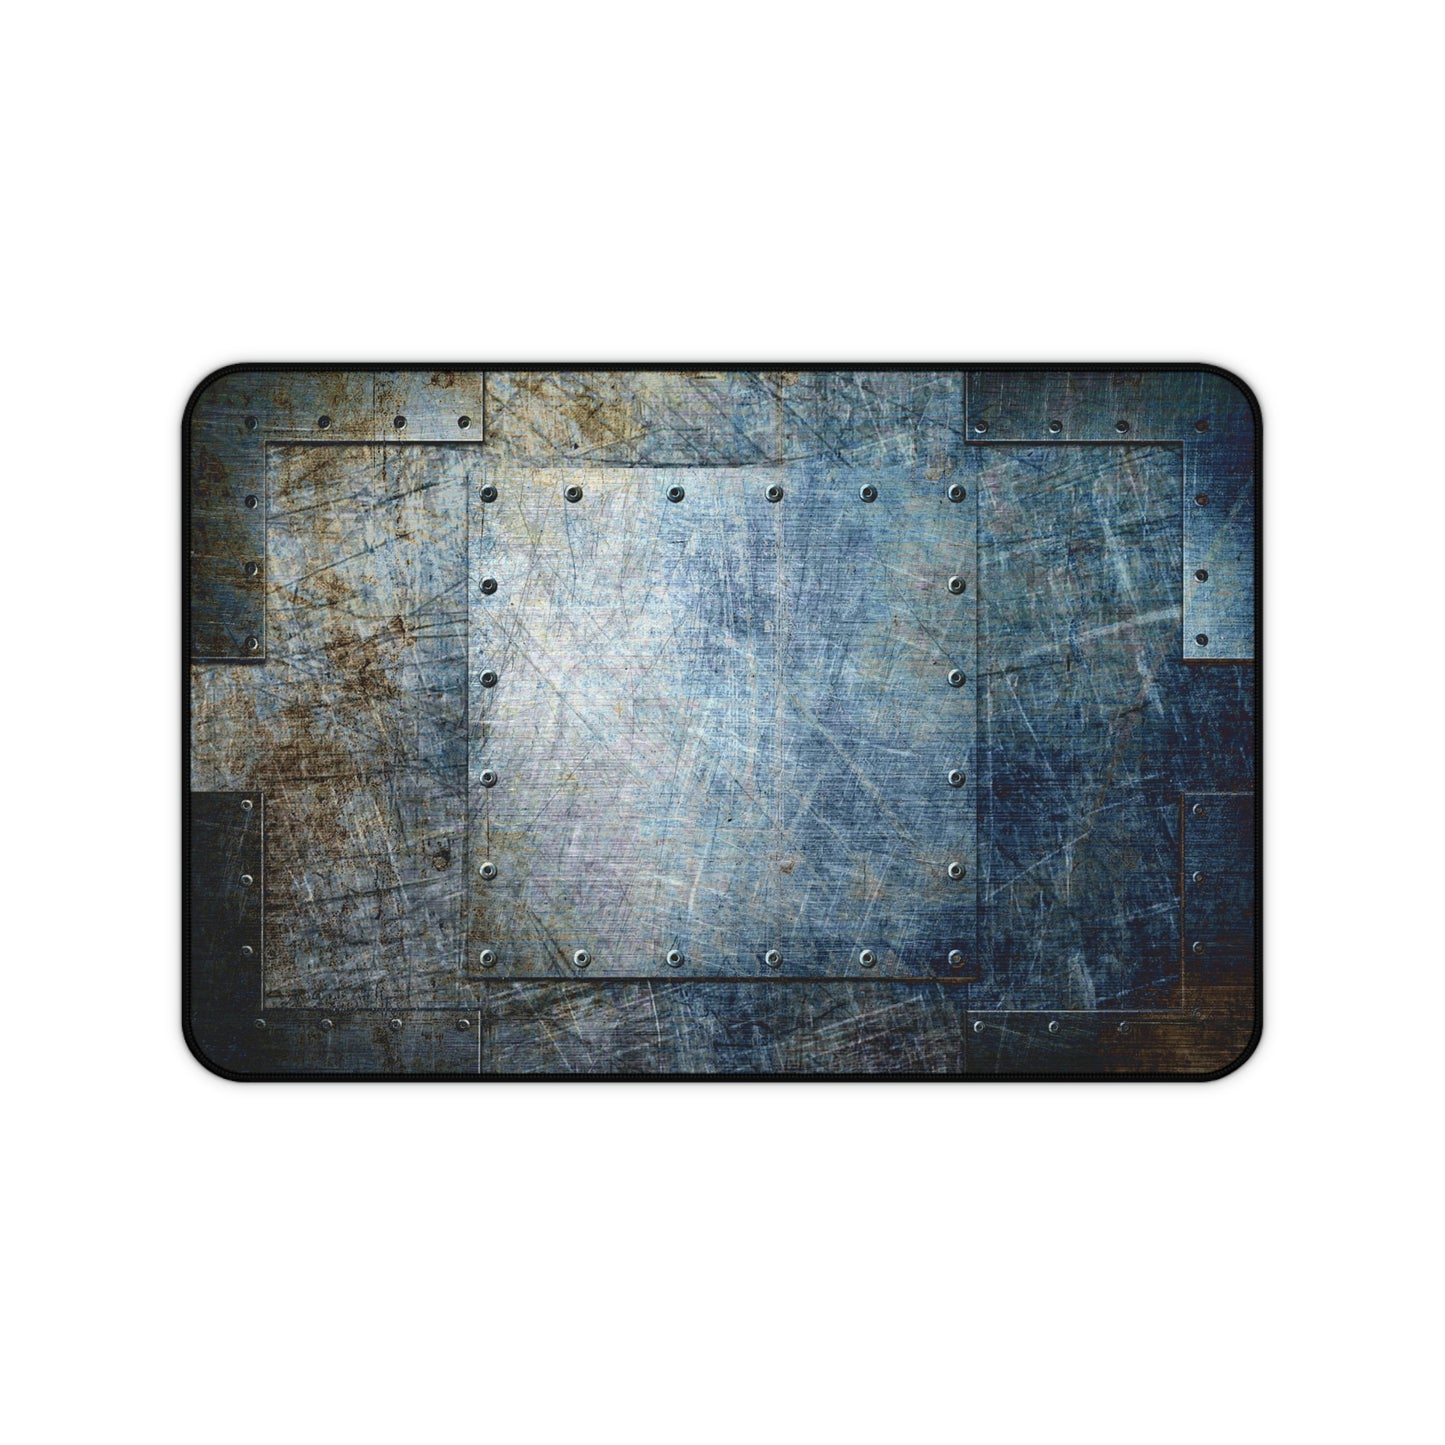 Steampunk Themed Desk Accessories - Distressed, Blued Steel Sheets on Neoprene Desk Mat 12 by18 